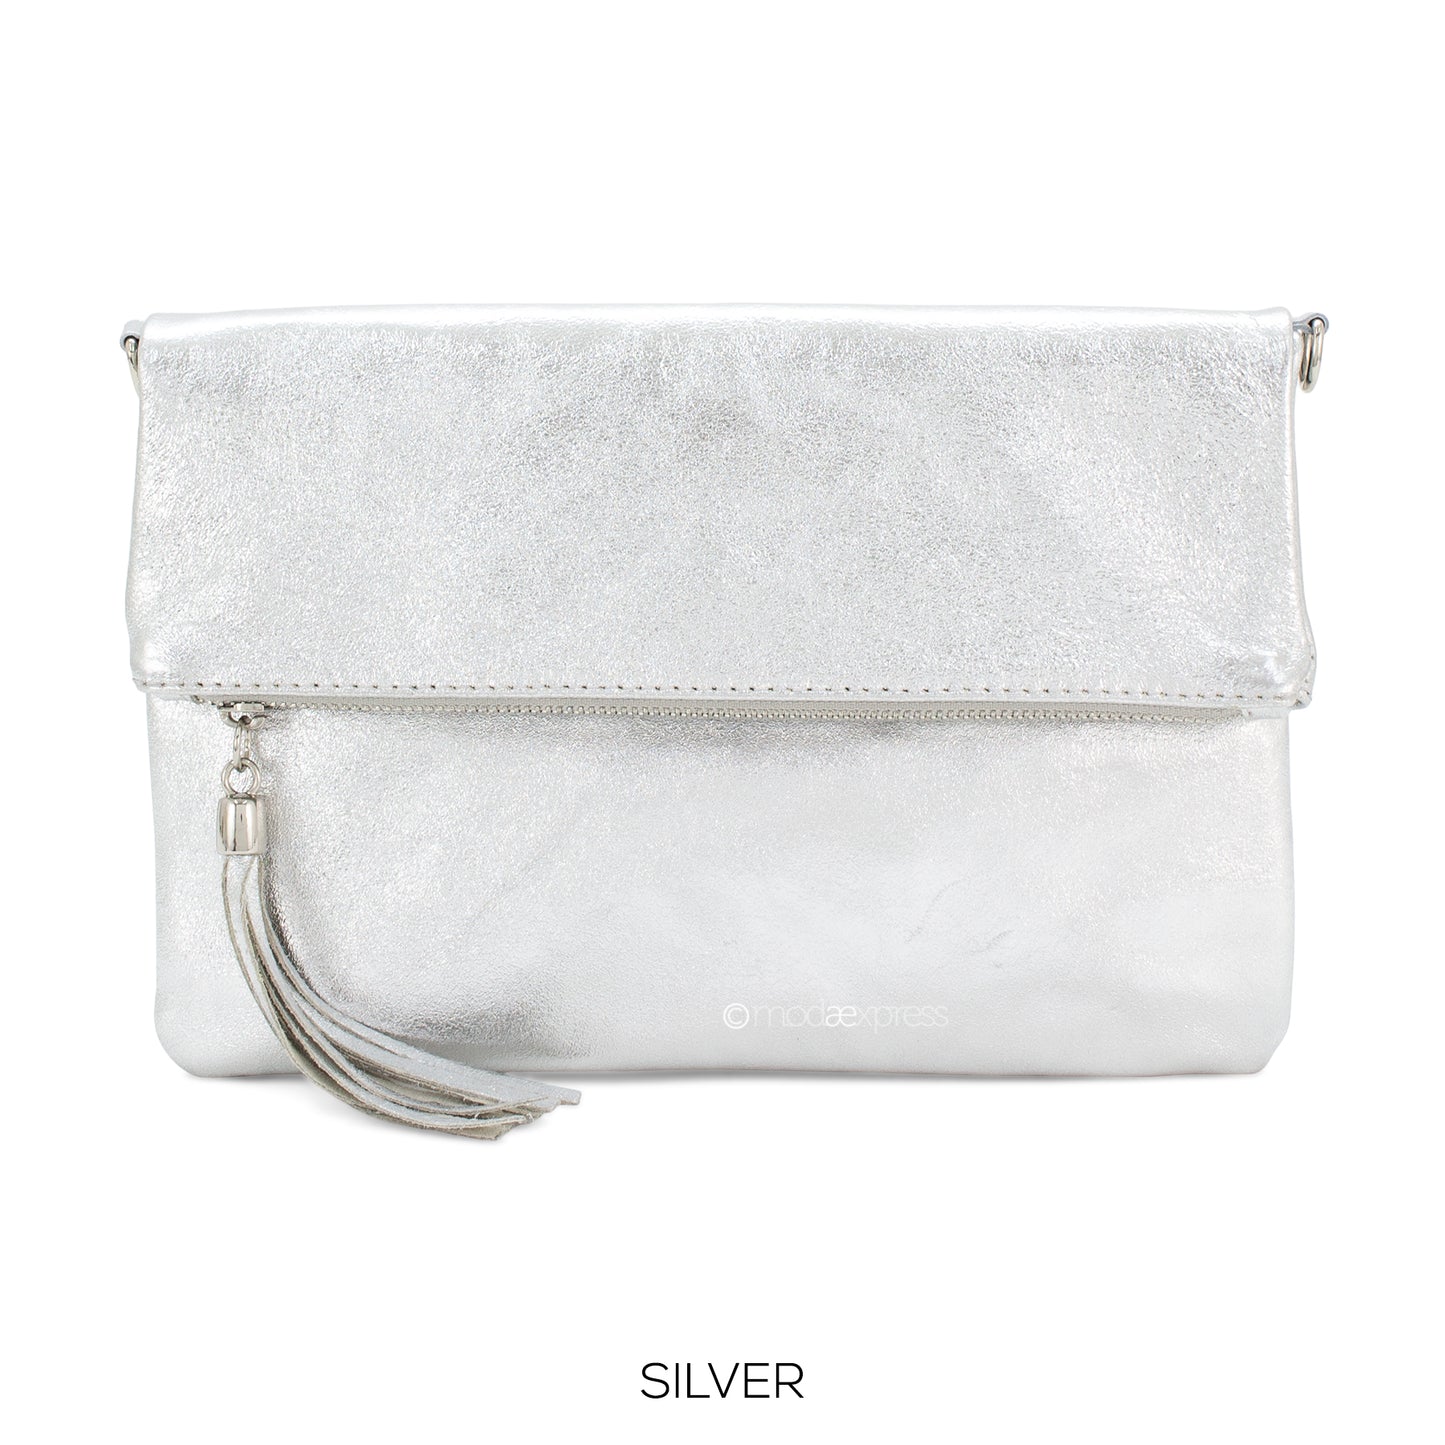 Moda Metallic Silver Clutch Bag